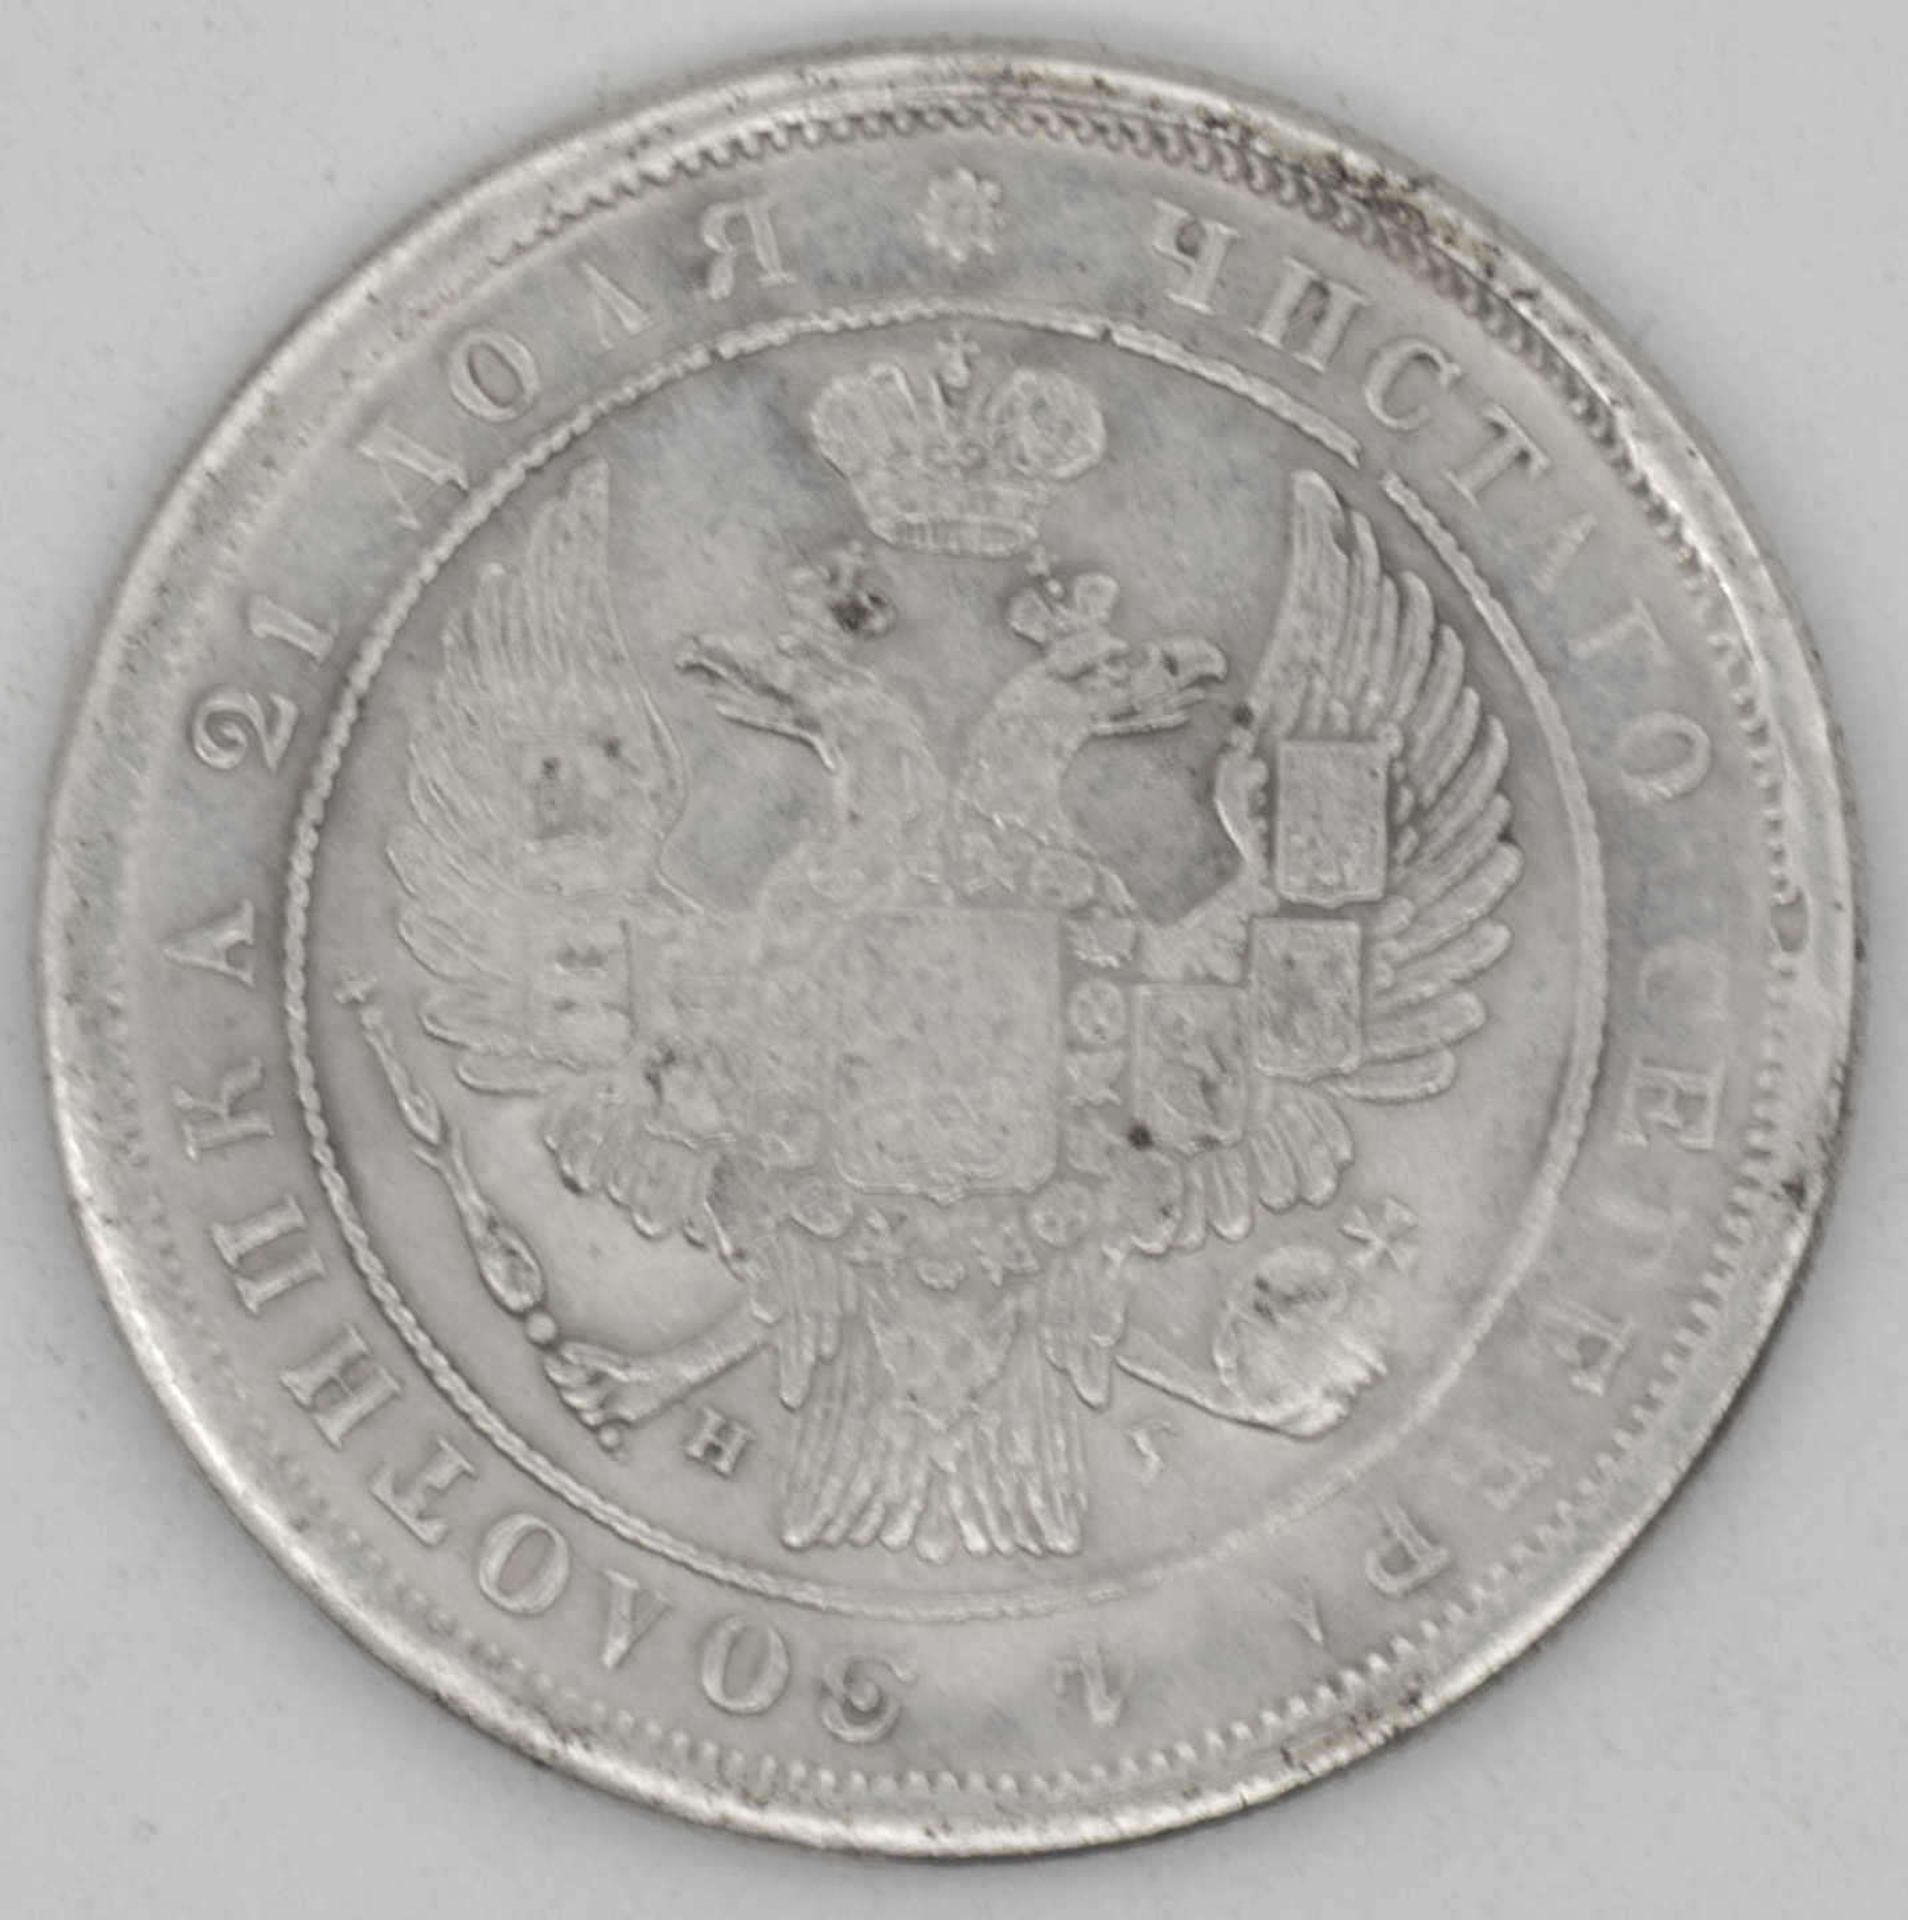 Russland 1833, St. Petersburg, 1 Rubel - Silbermünze "Zar Nikolaus I. (1825 - 1855)". Qualität: s - Image 2 of 2